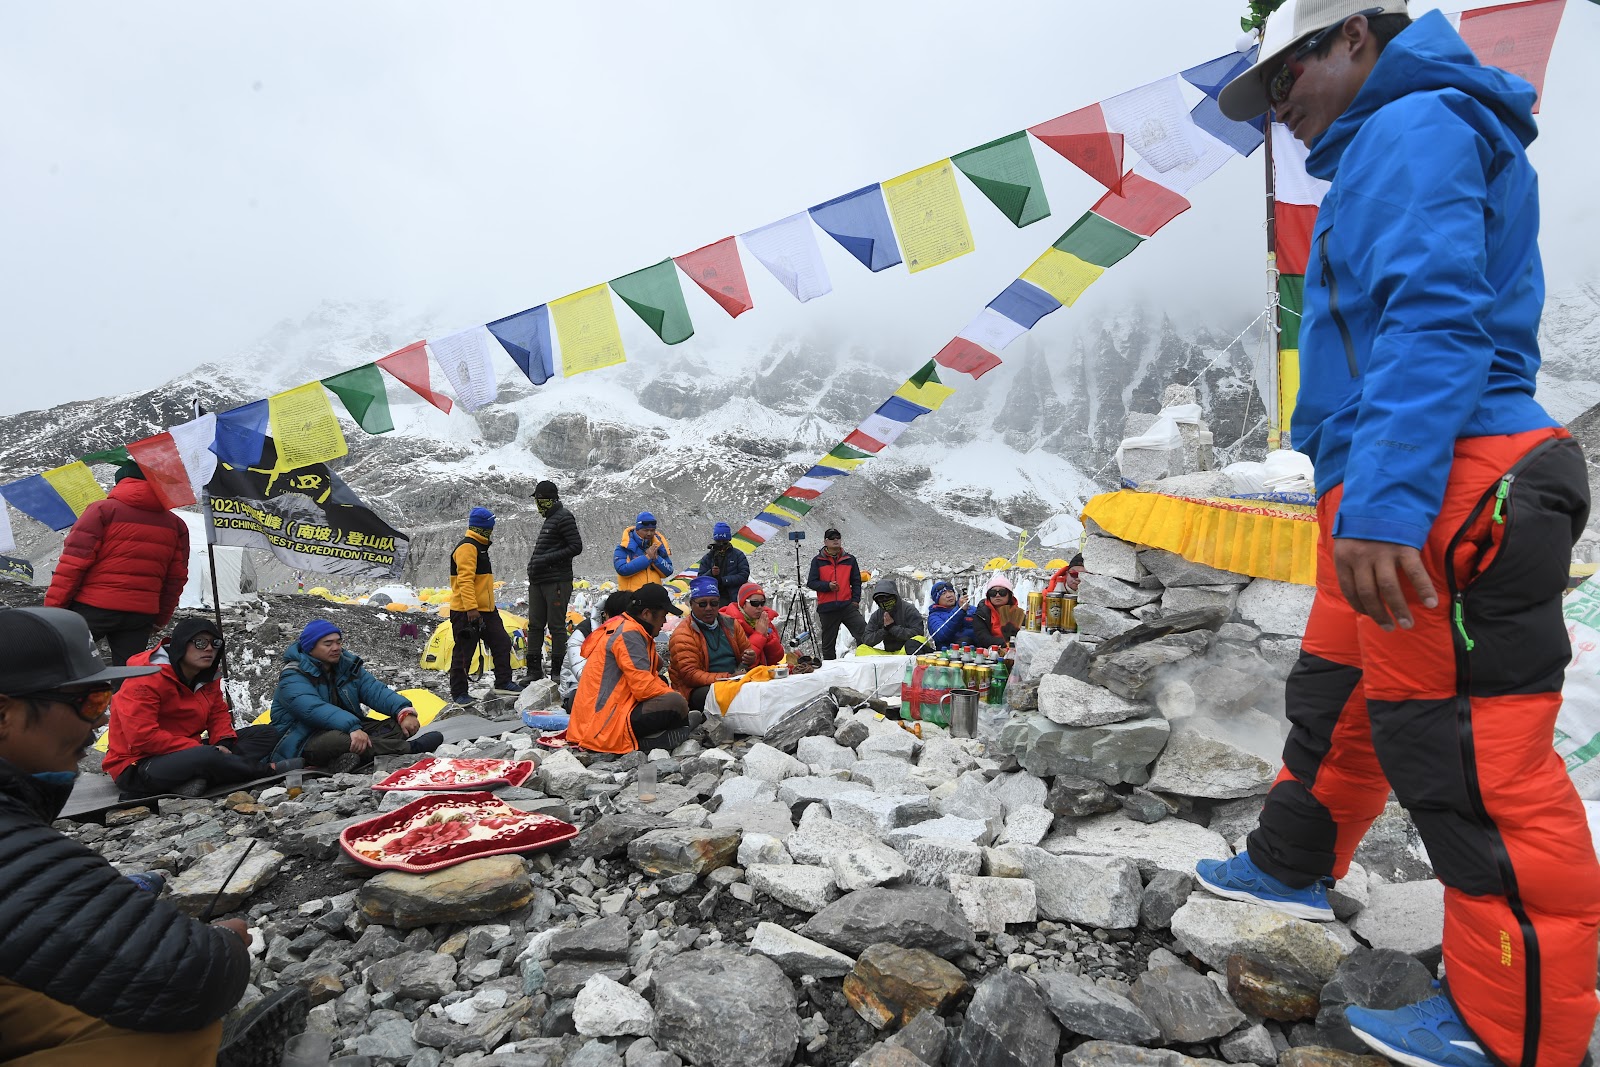 Ceremonial prayers at Everest Base Camp, with synthetic prayer flags flying. | Prakash Mathema